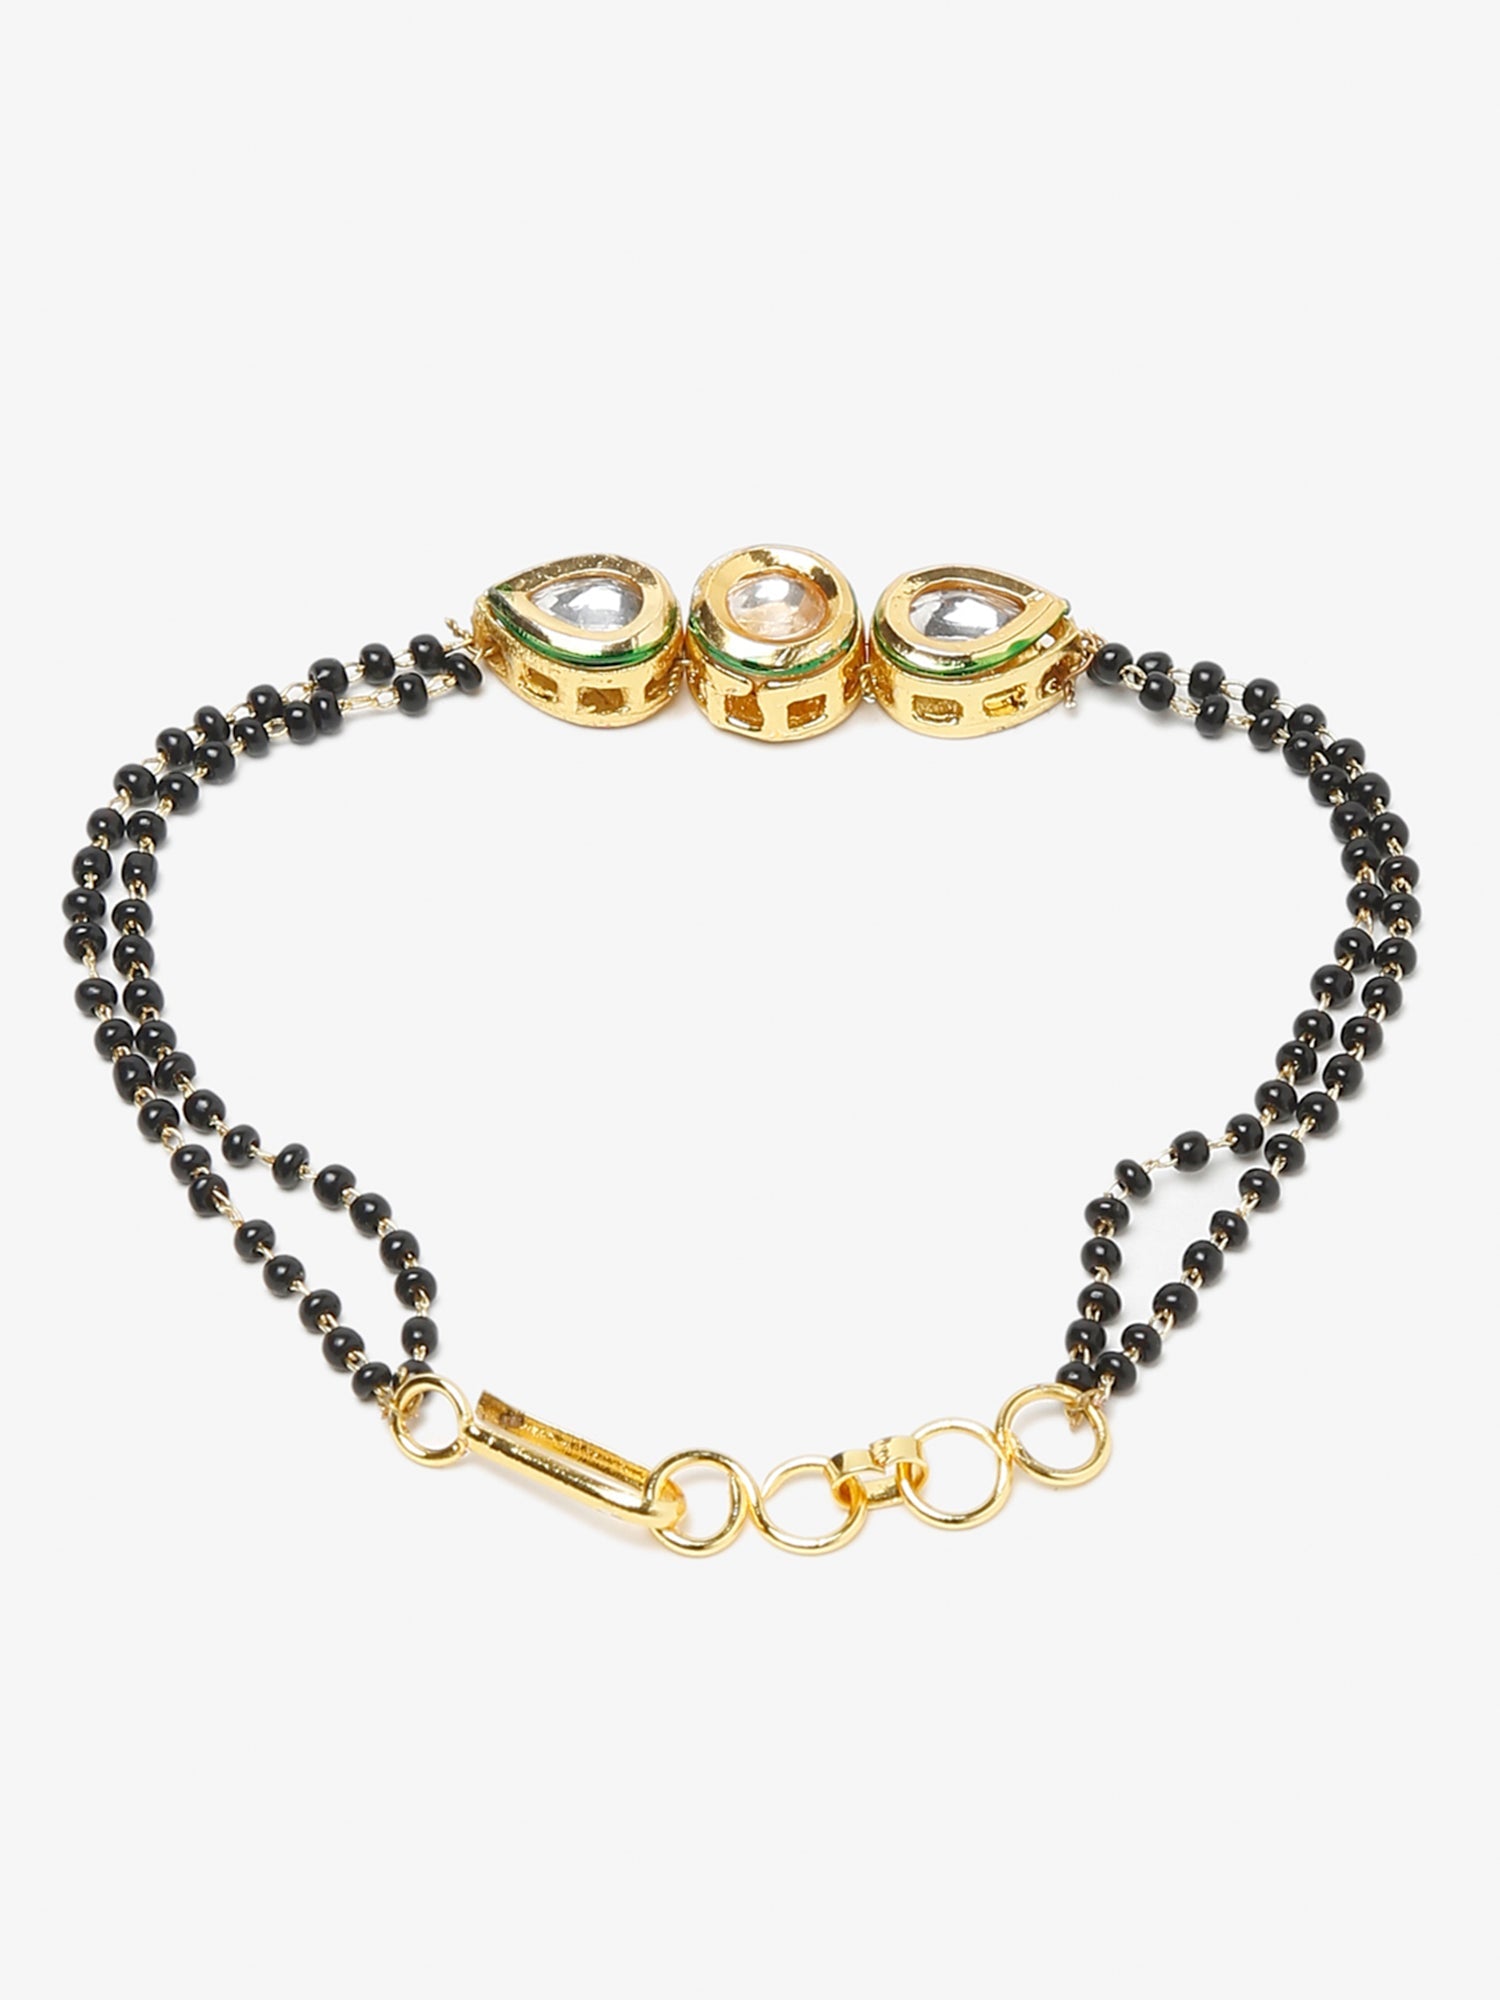 Mangalsutra Bracelet Designs | Bridal Accessories | Mangalsutra Designs |  Black beaded jewelry, Gold bracelet chain, Jewelry bracelets gold